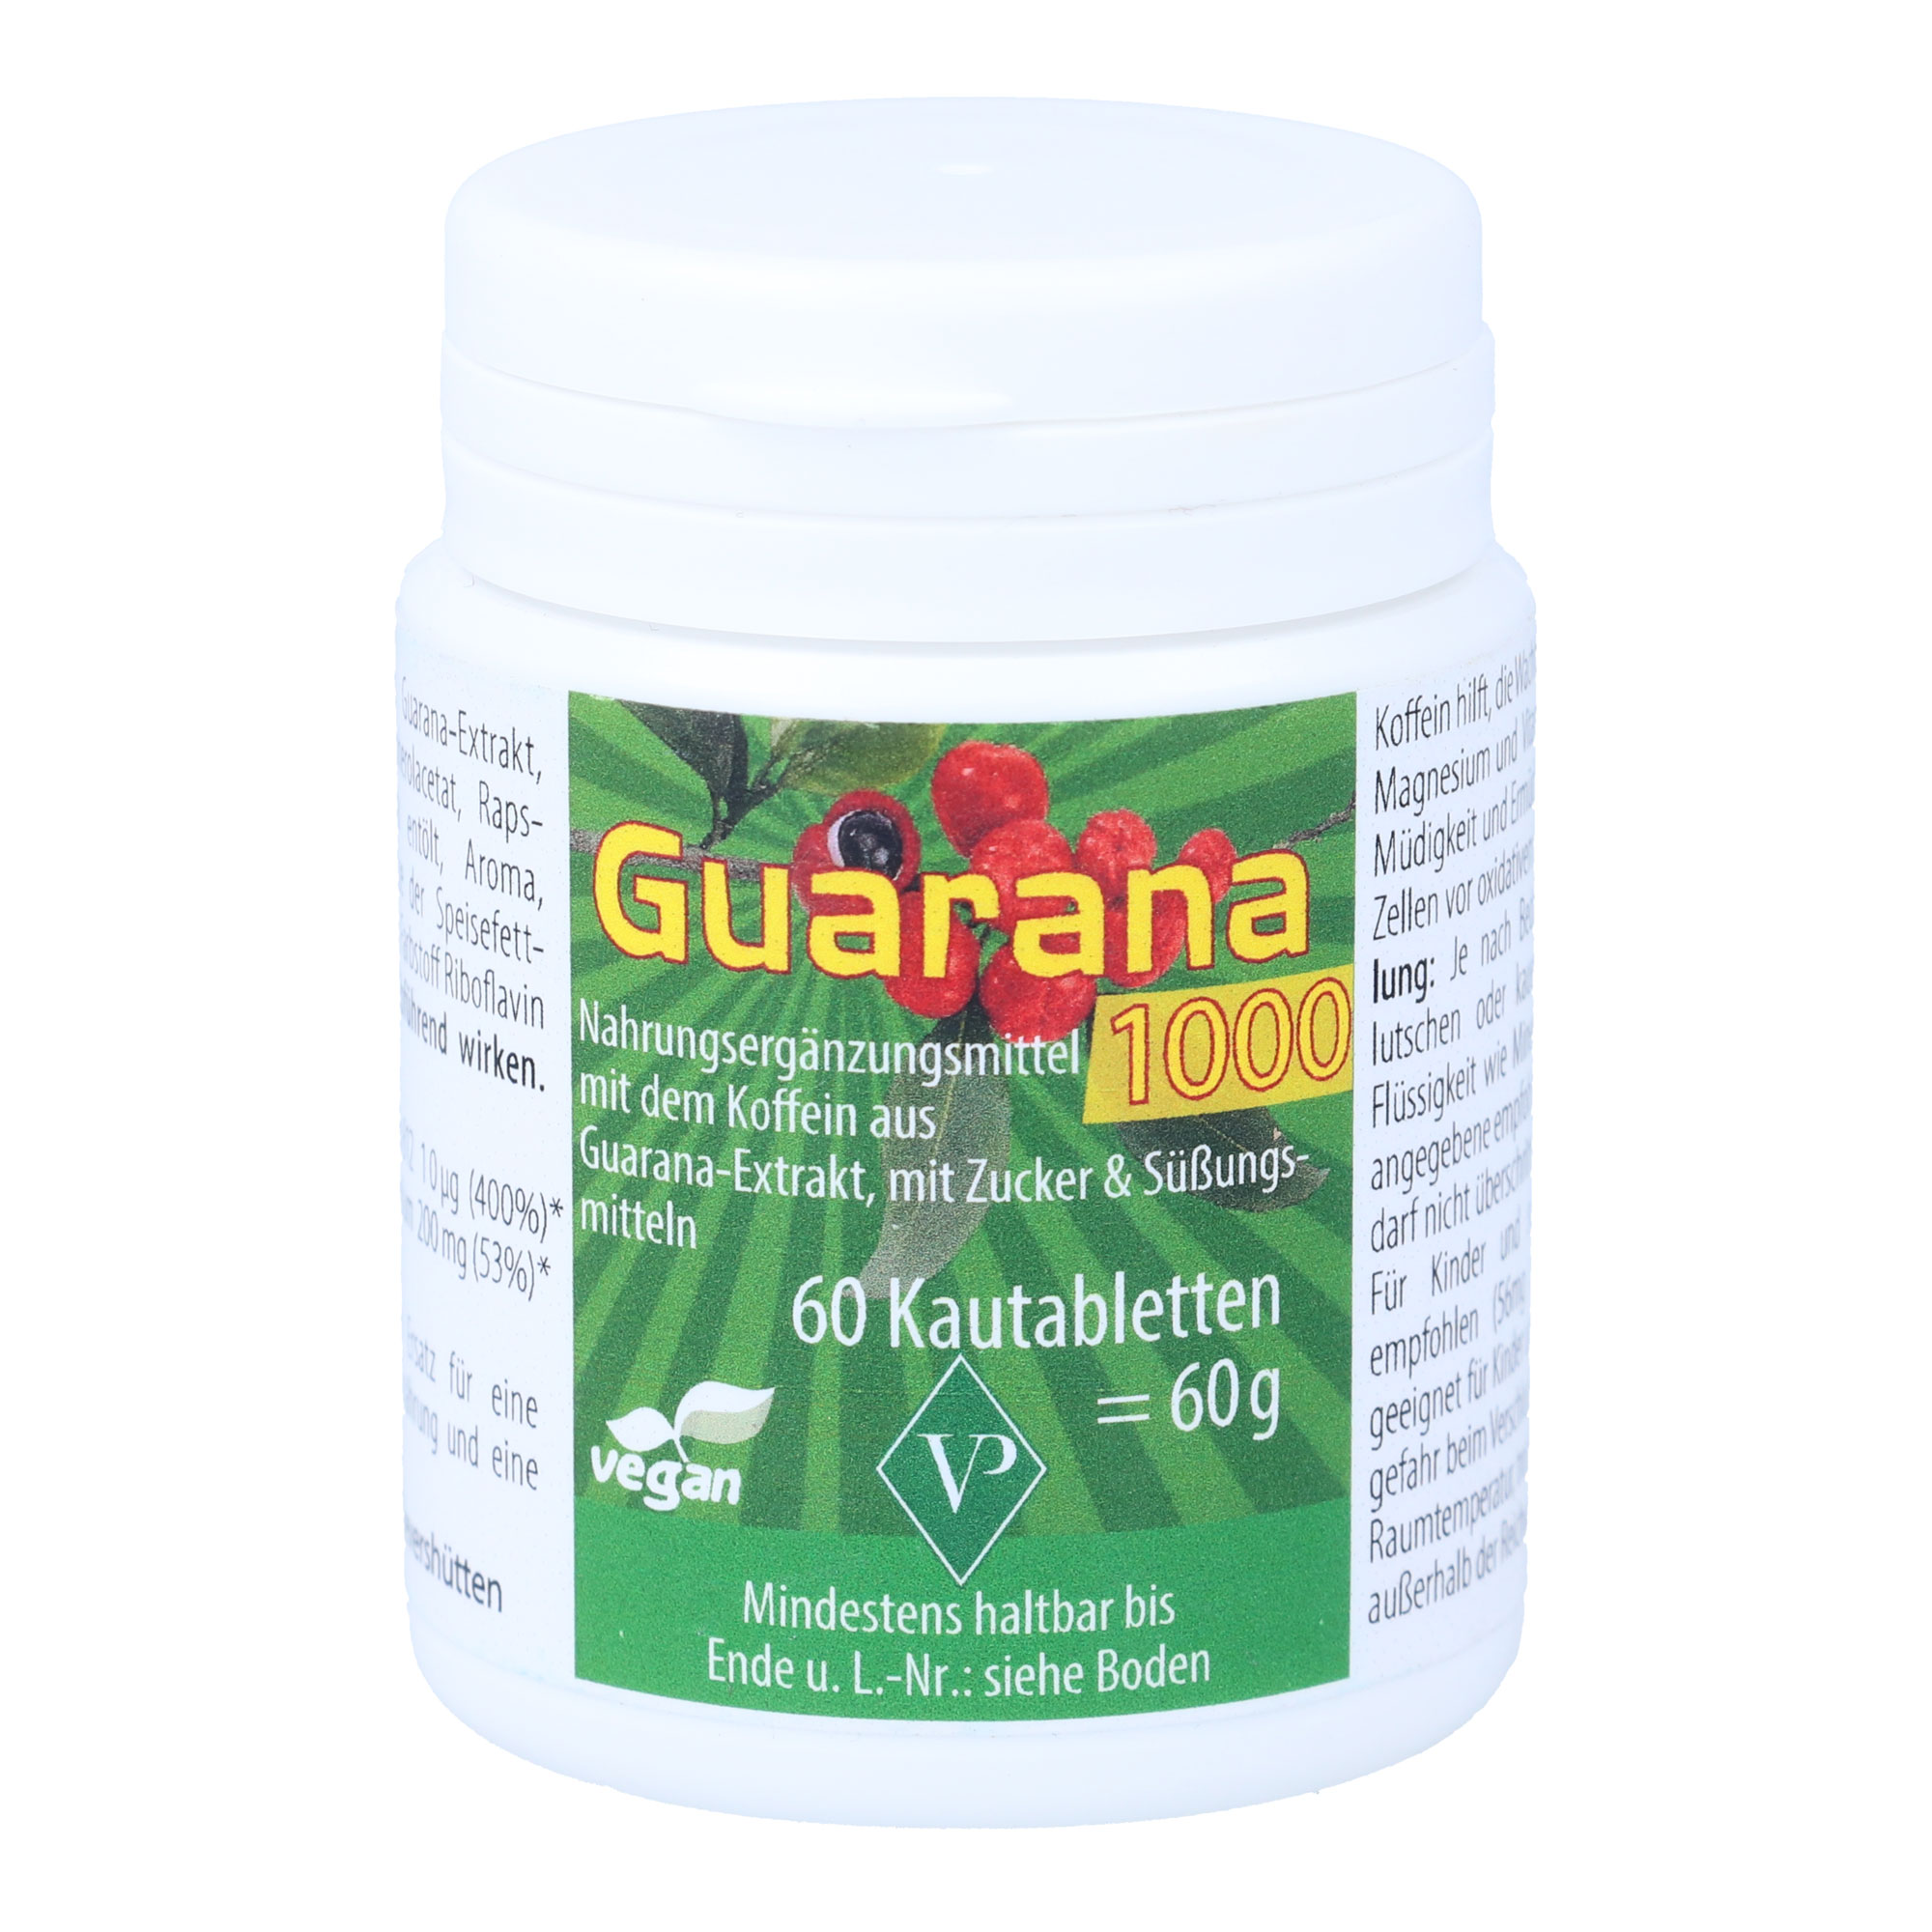 Nahrungsergänzungsmittel mit Guarana-Extrakt.